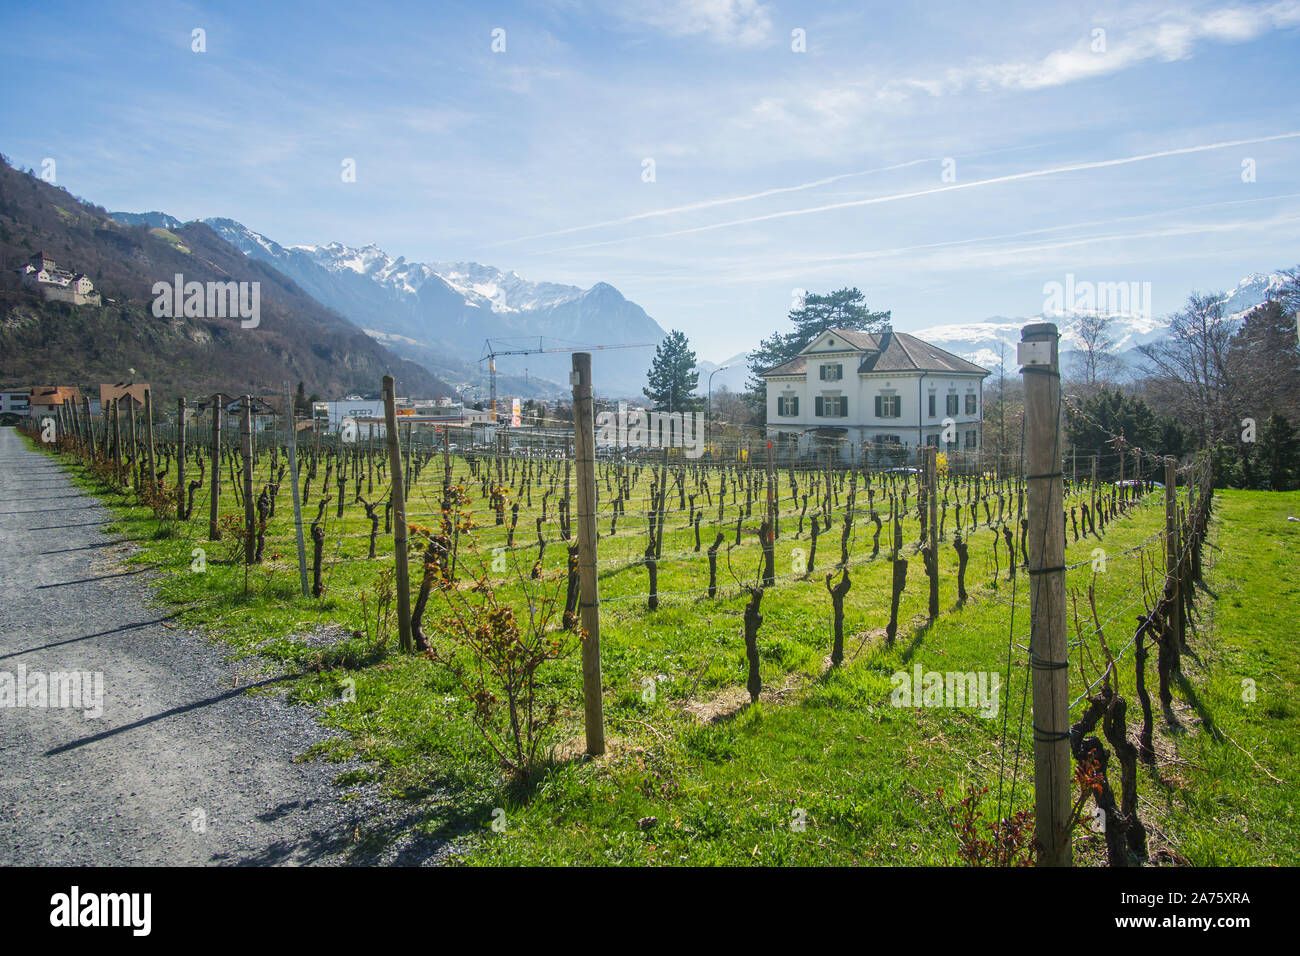 The beautiful vineyards outside of the  Cellars of the Prince of Liechtenstein Winery in Liechtenstein. Stock Photo